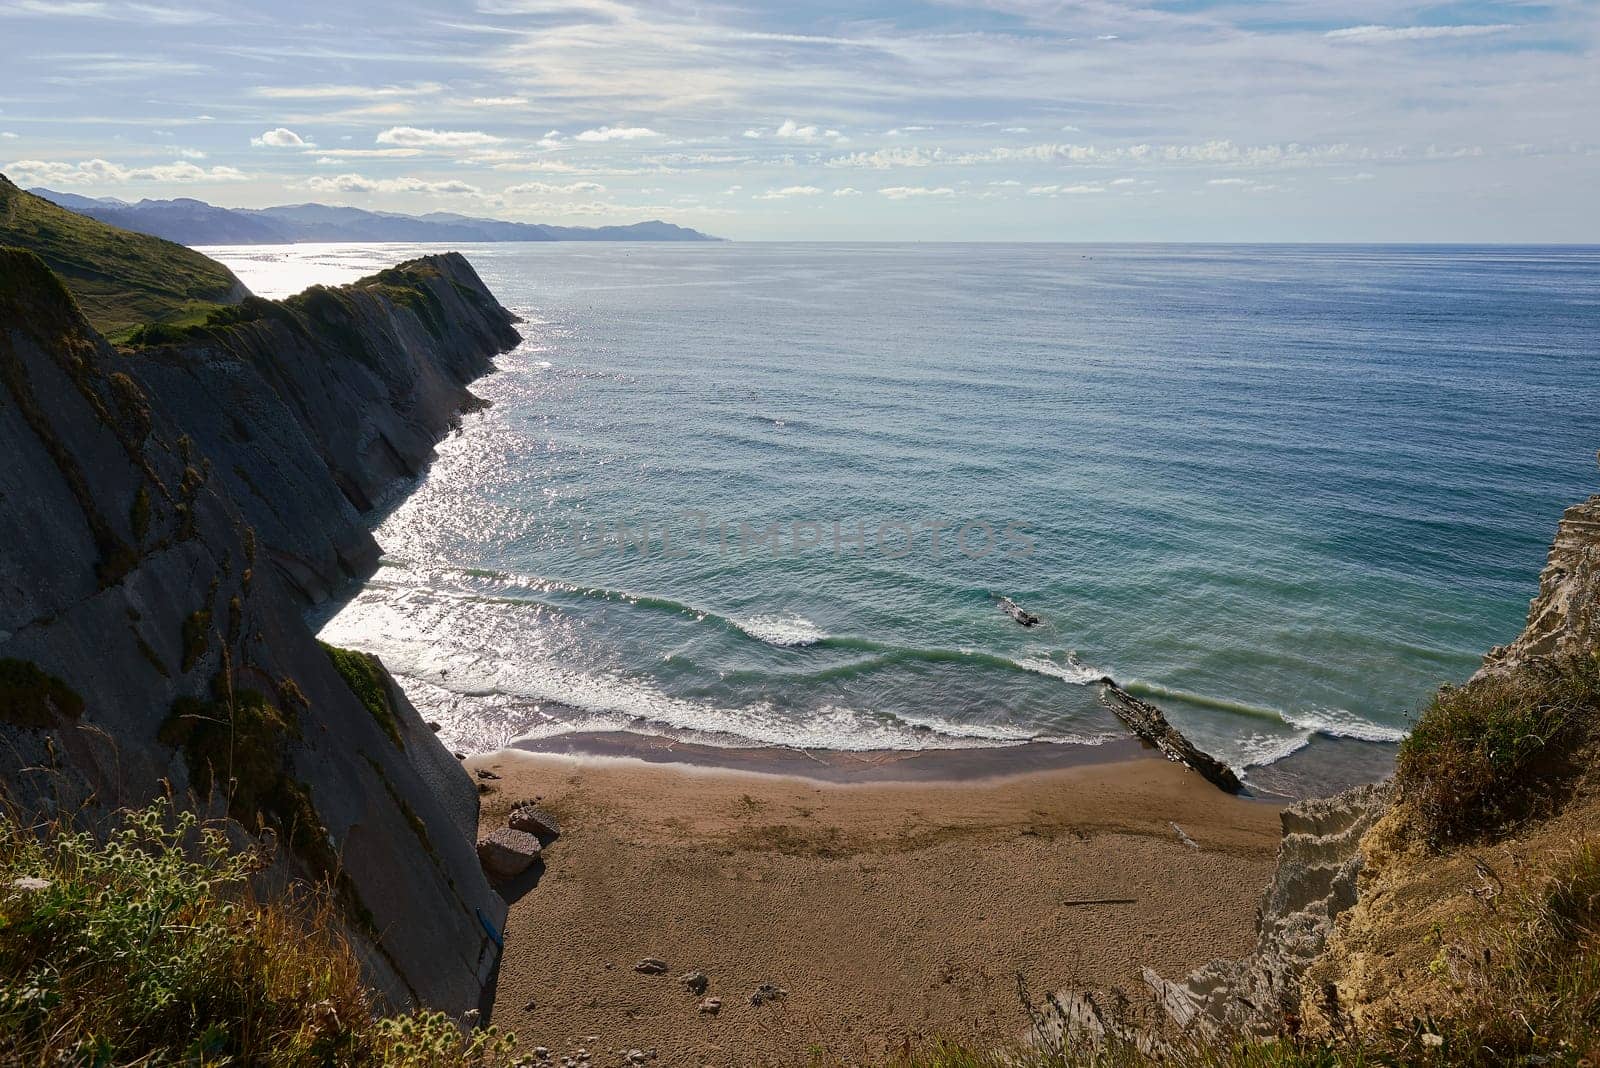 Rock formations on the coast of Zumaya, Spain by raul_ruiz